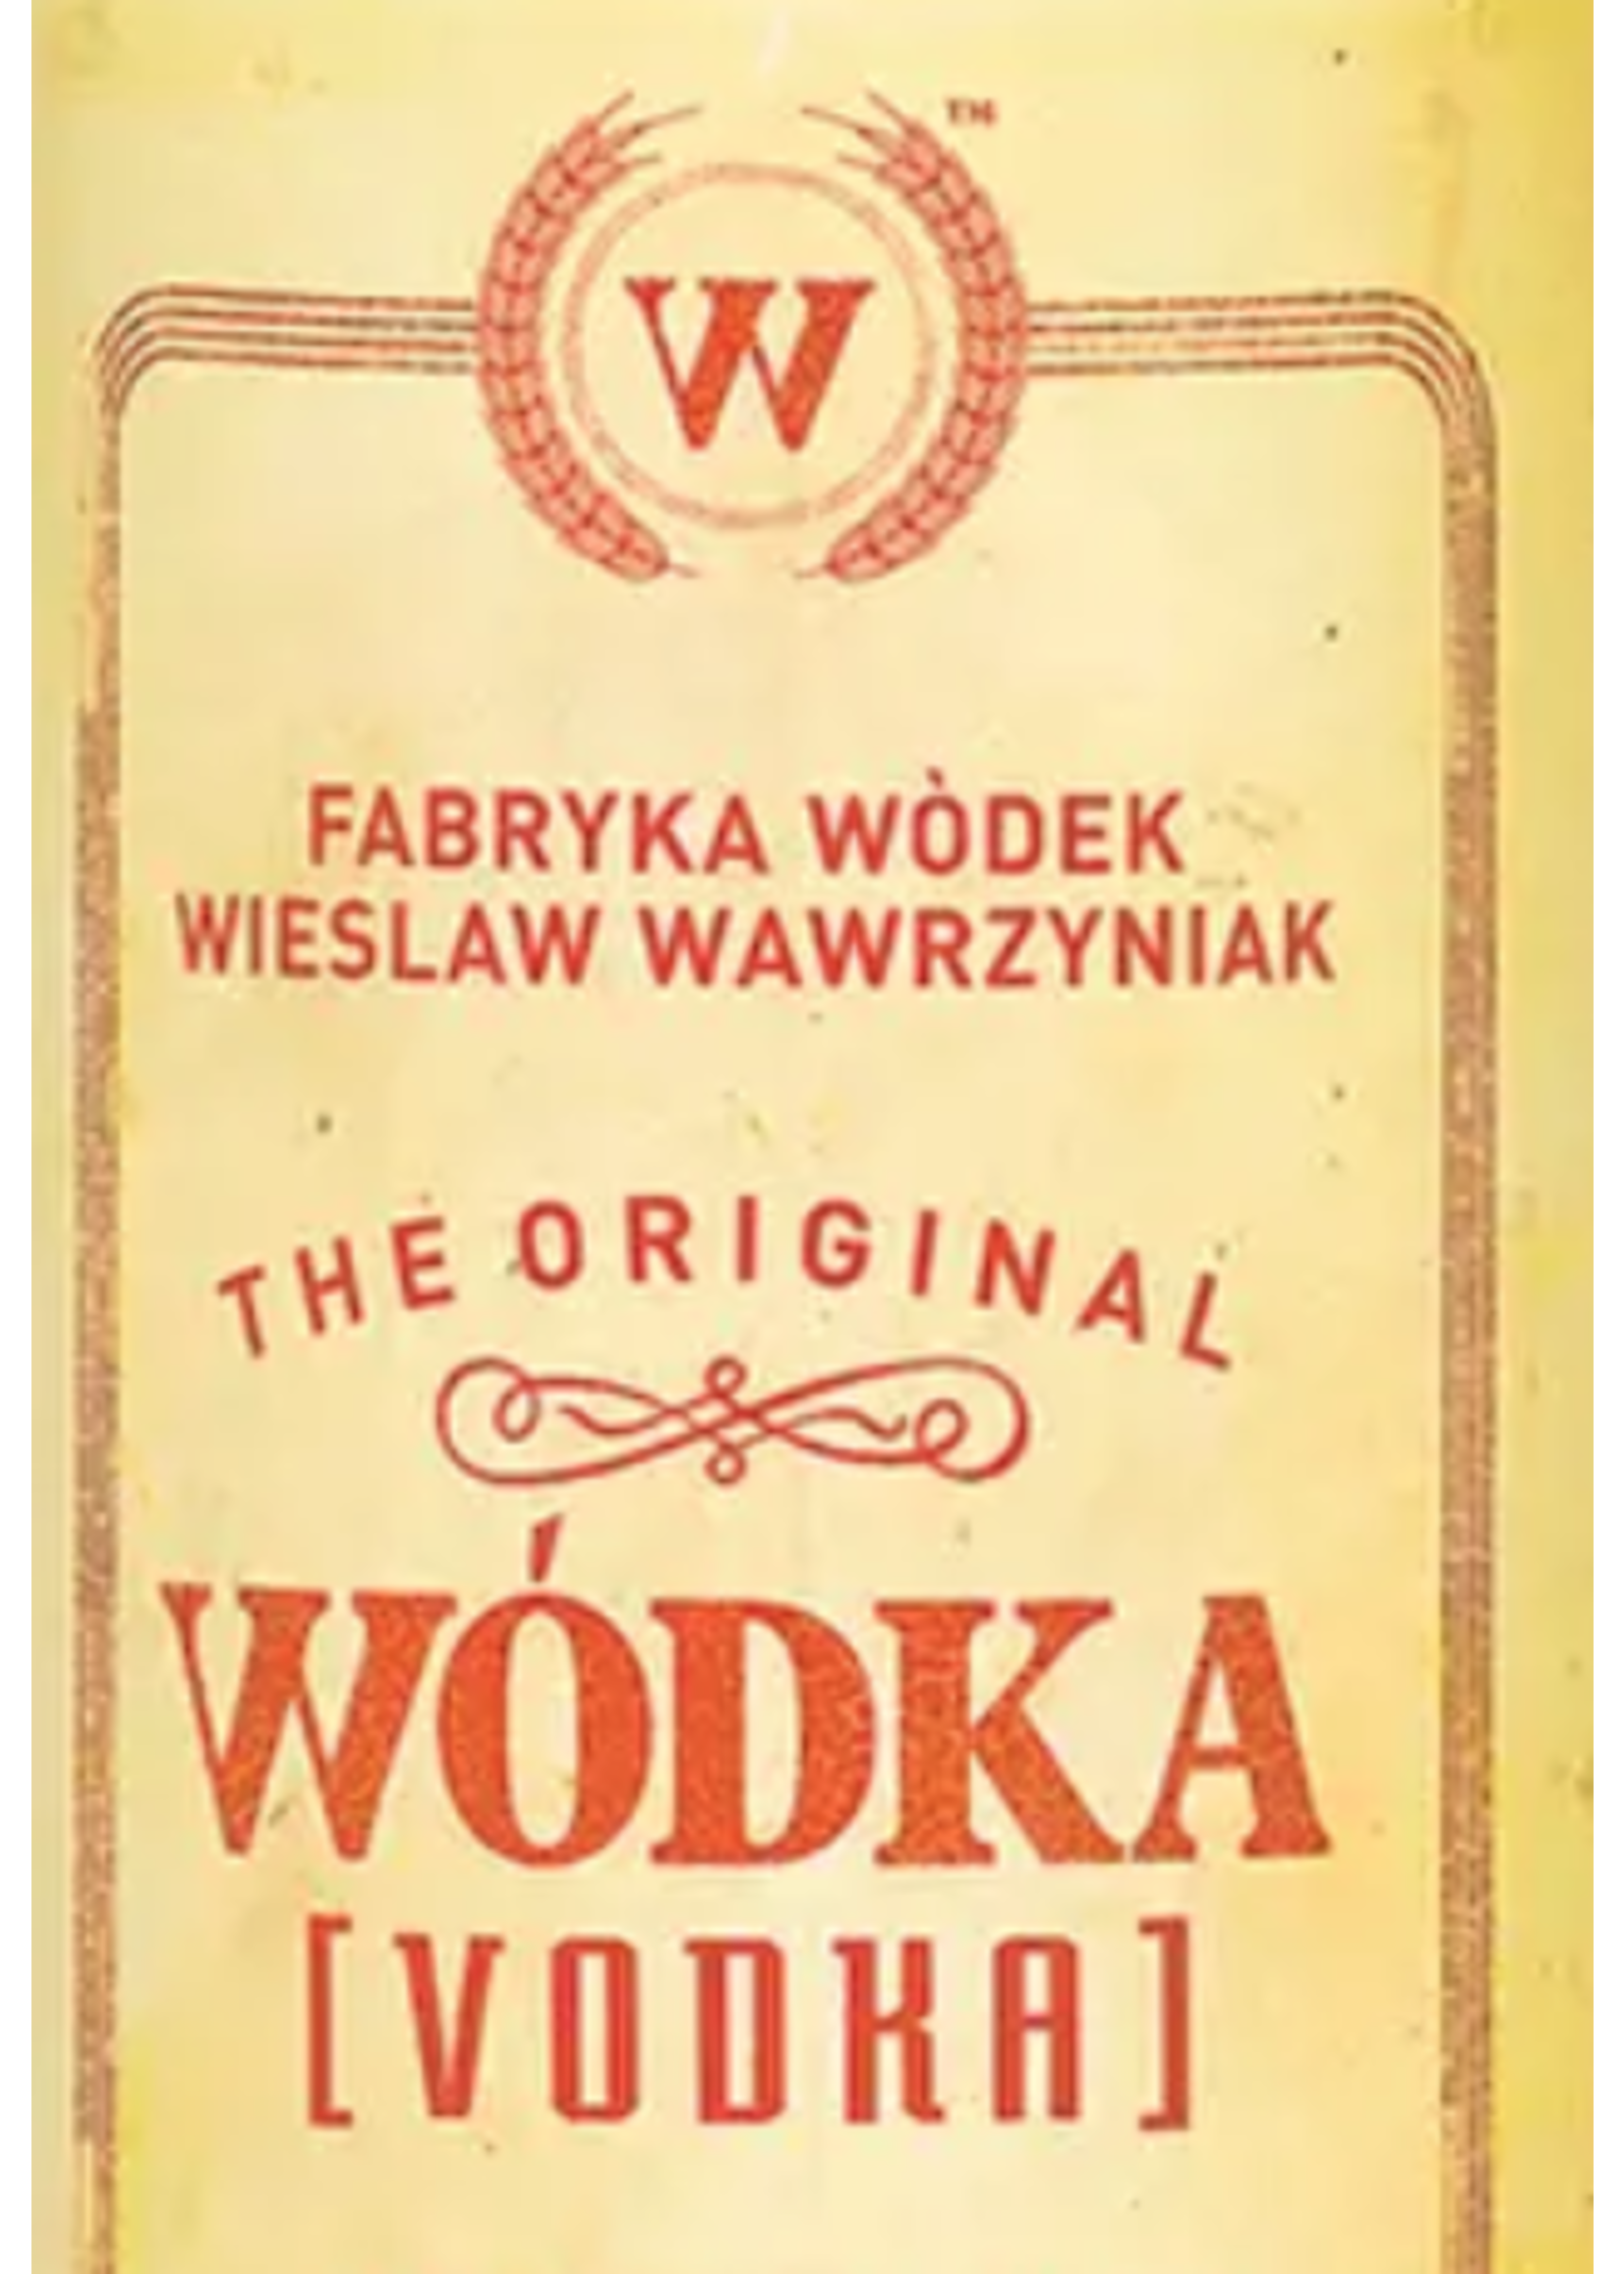 WÓDKA Vodka 200ml - WÓDKA Polish Rye Vodka